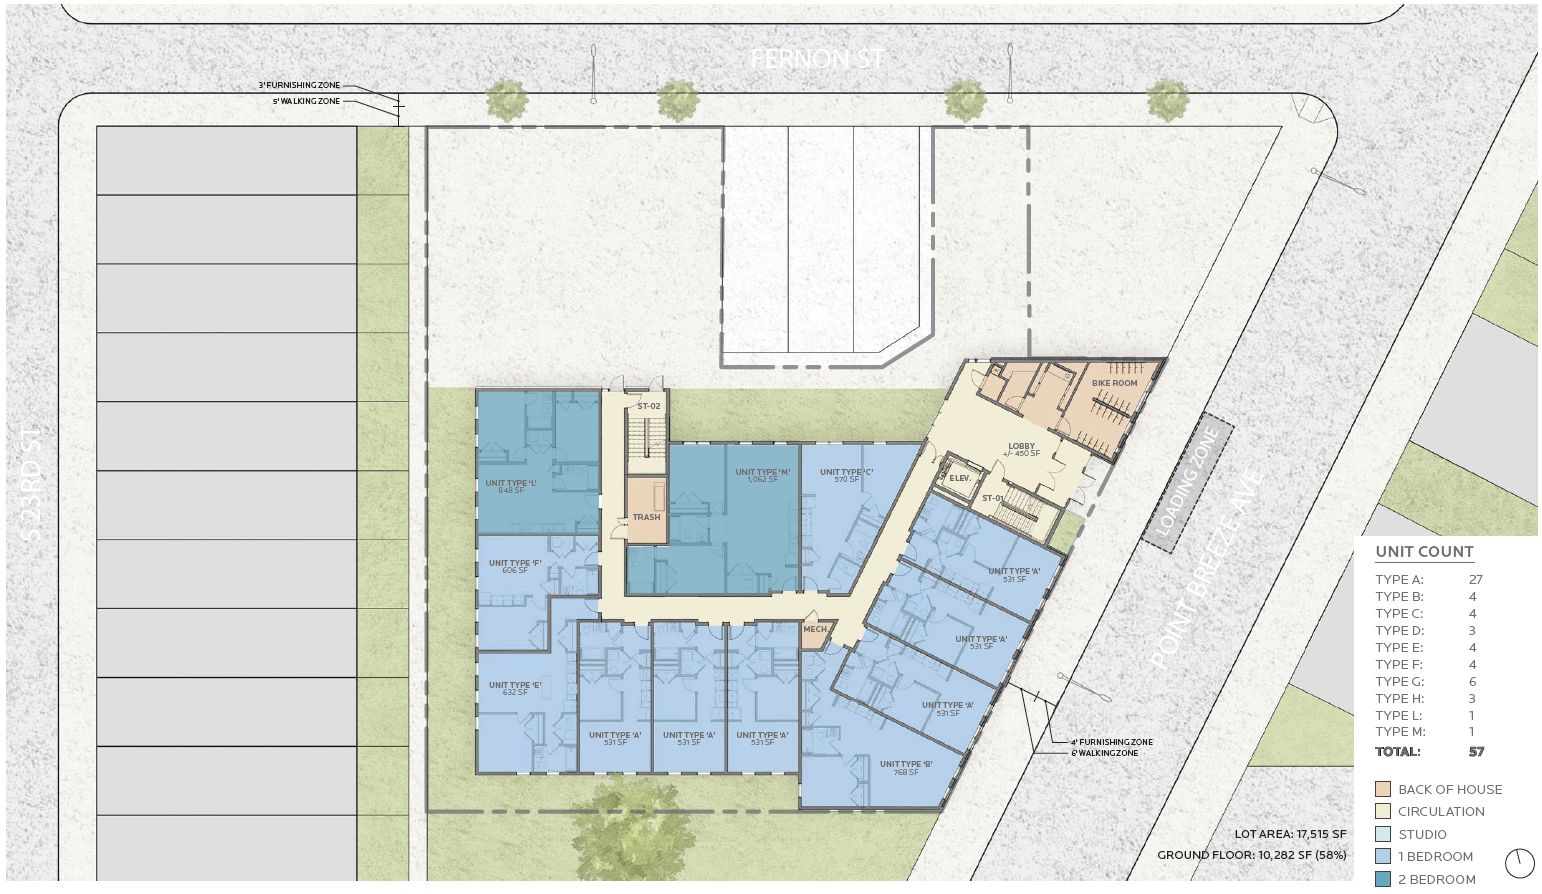 1622-40 Point Breeze Avenue. Floor plan - ground level. Credit: JKRP Architects via the Civic Design Review